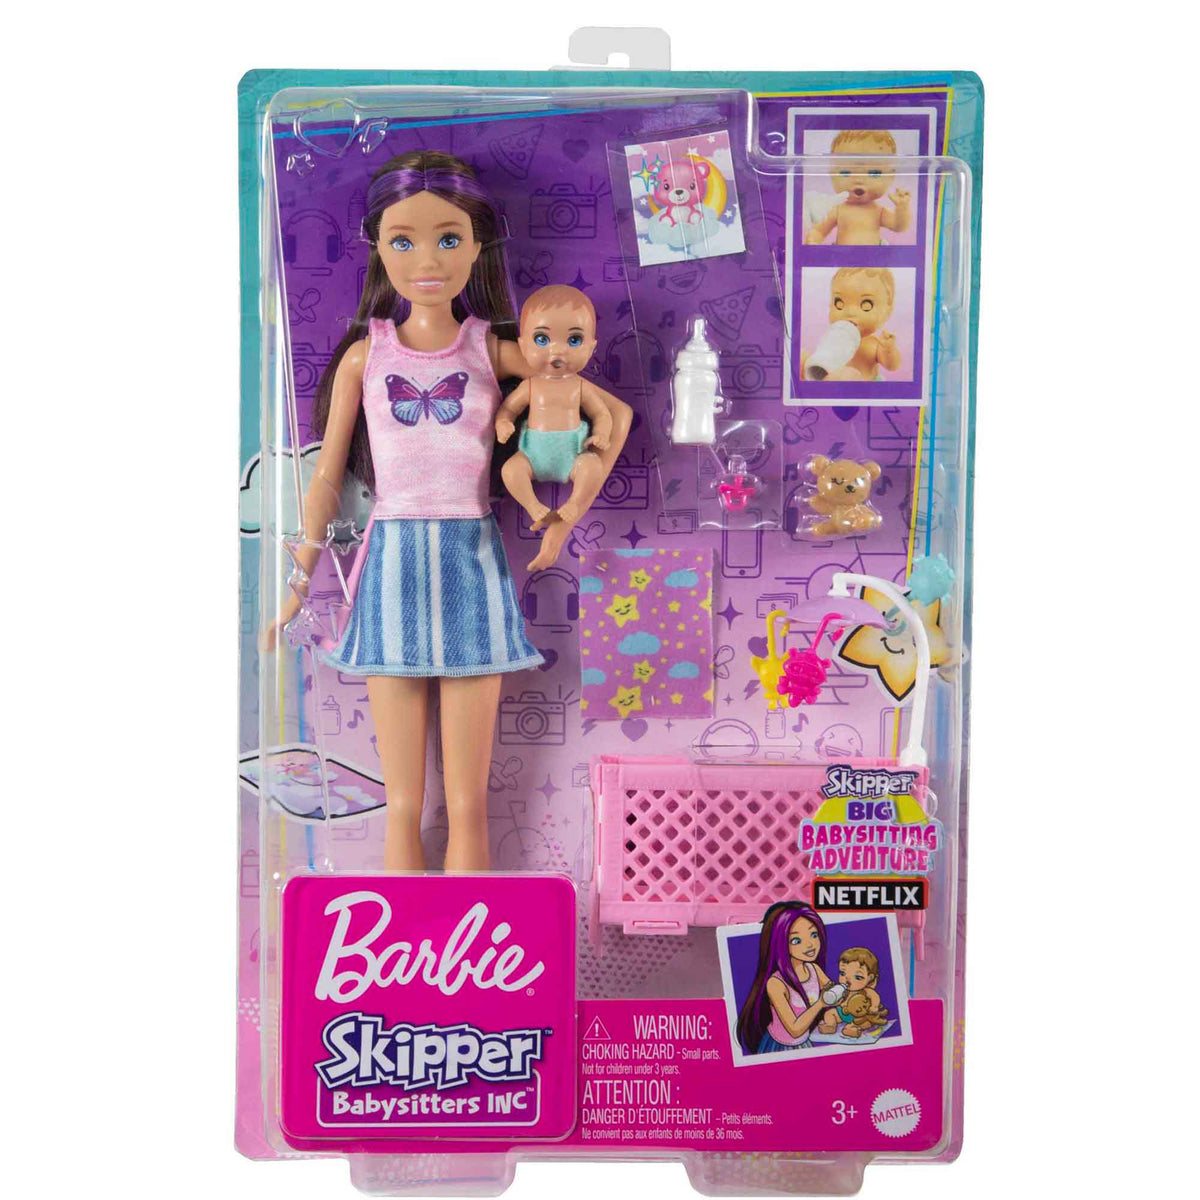 Barbie Skipper Big Babysitting Adventure Sleepy Baby Playset